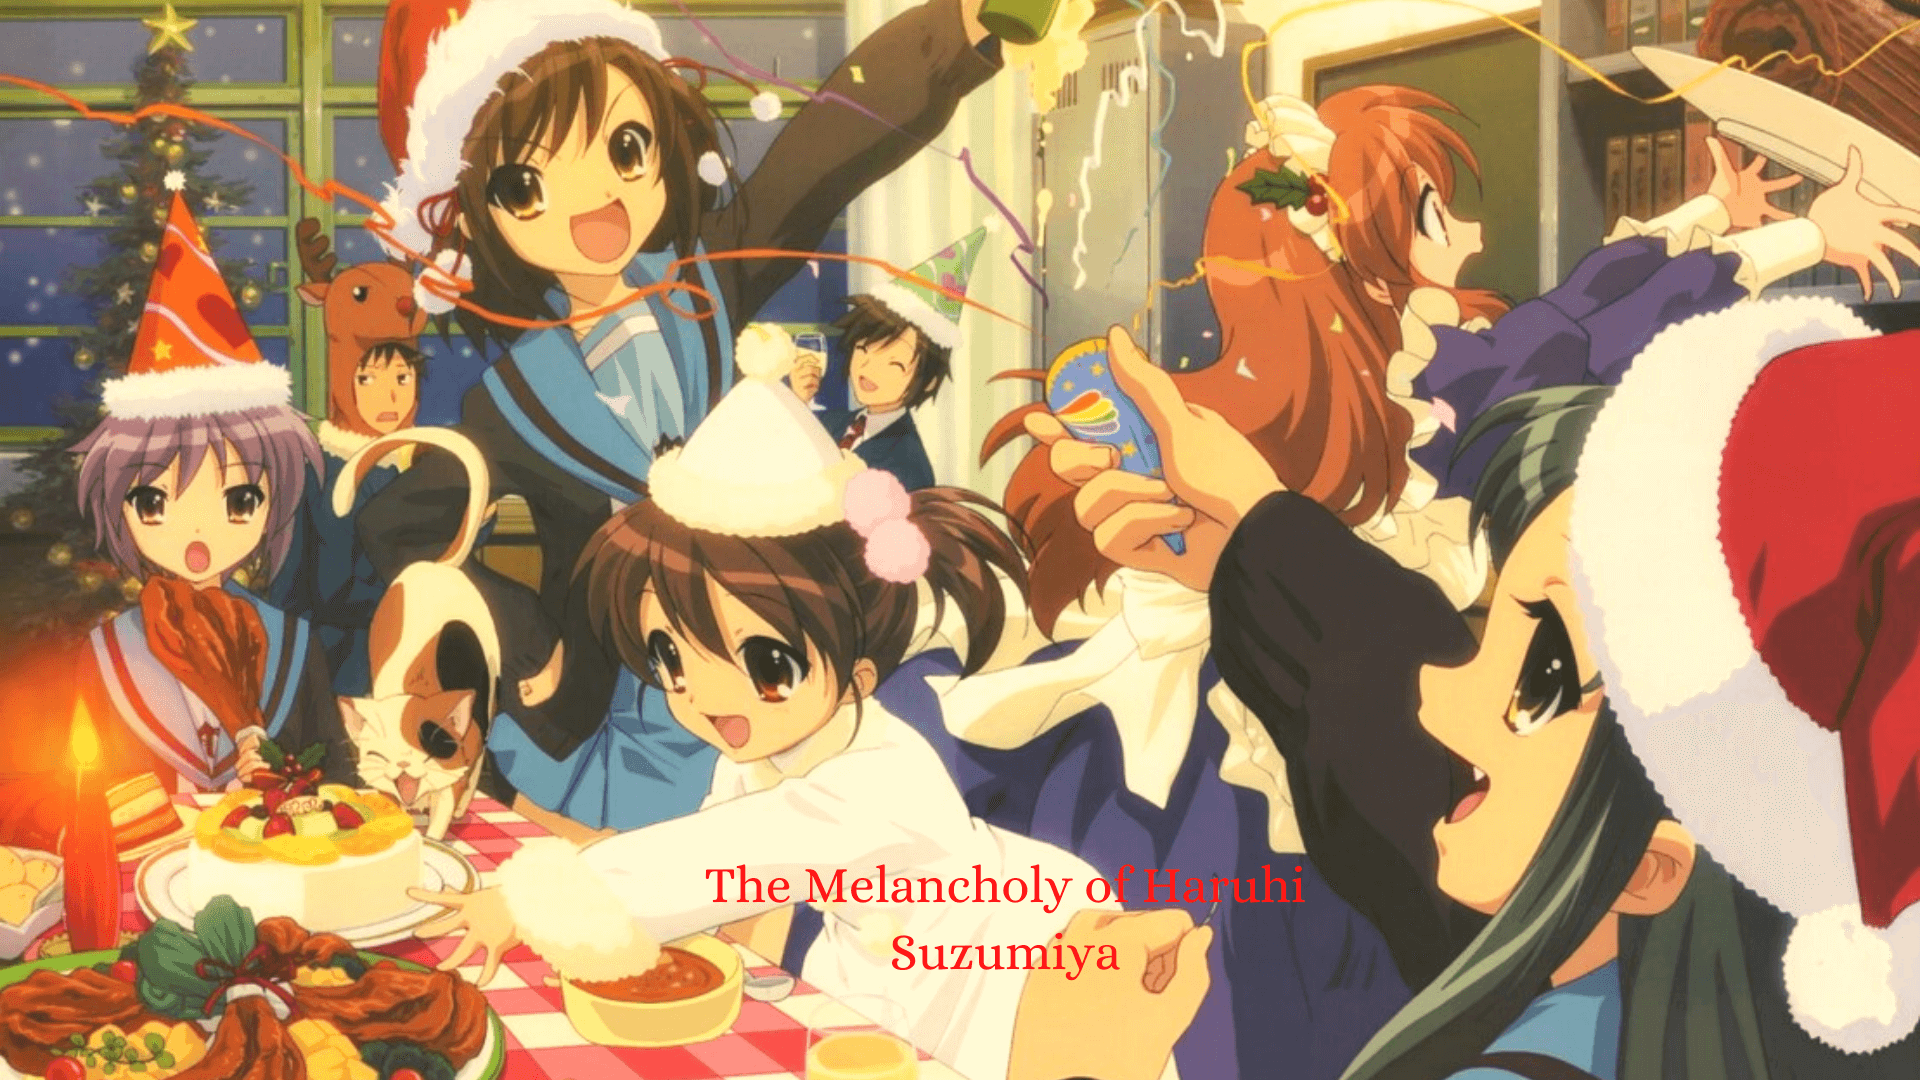 The Melancholy Of Haruhi Suzumiya -The Top 10 Christmas Anime To Watch This Holiday Season